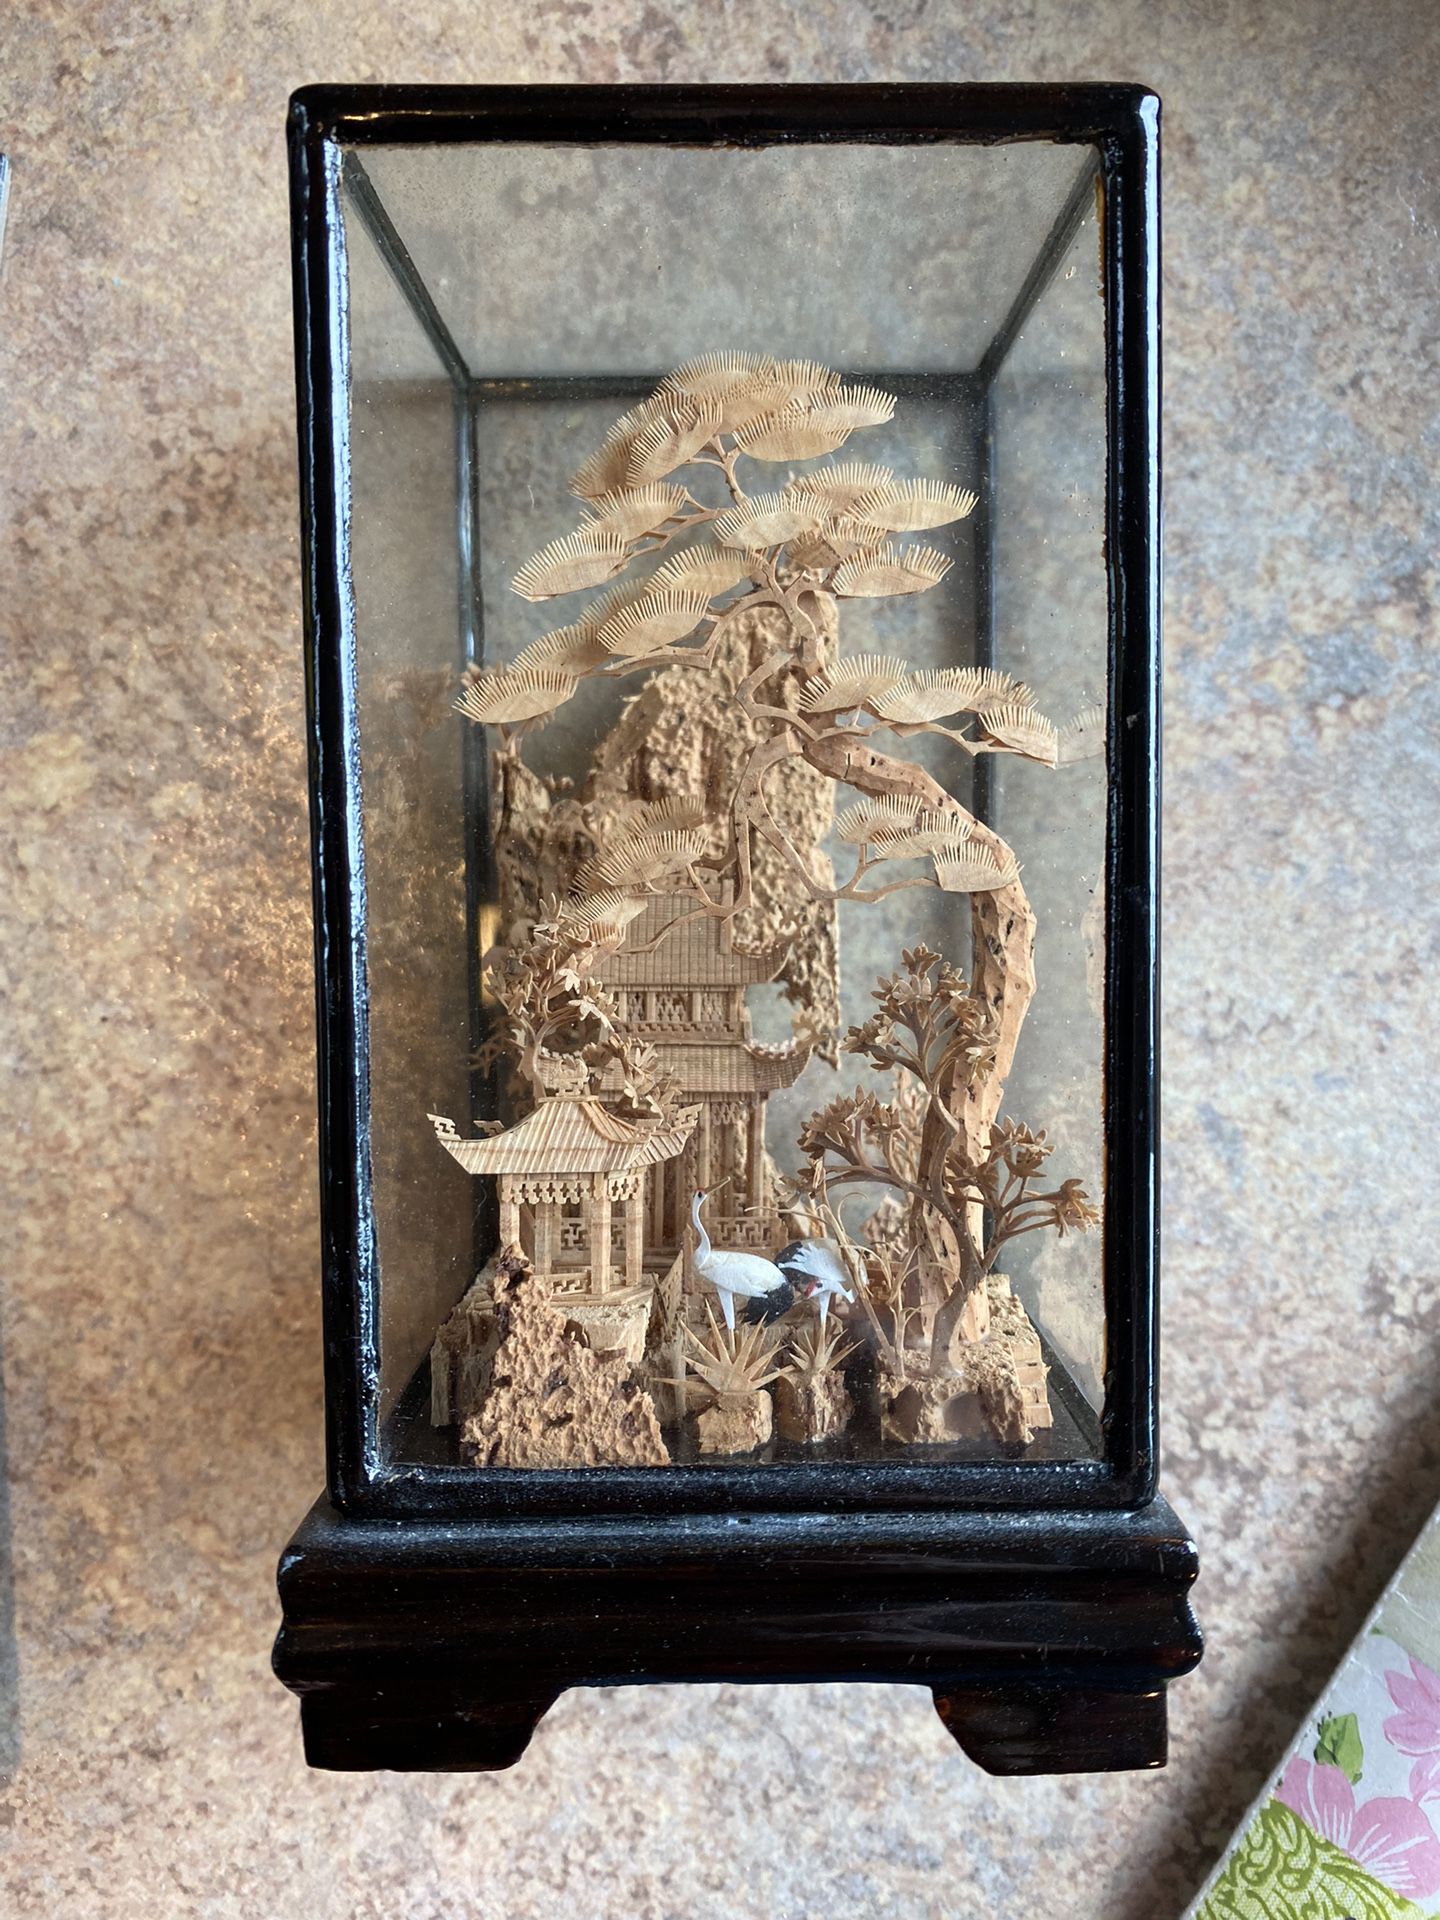 Chinese Cork Art Diorama Storks 1999’s Vintage China Town San Francisco